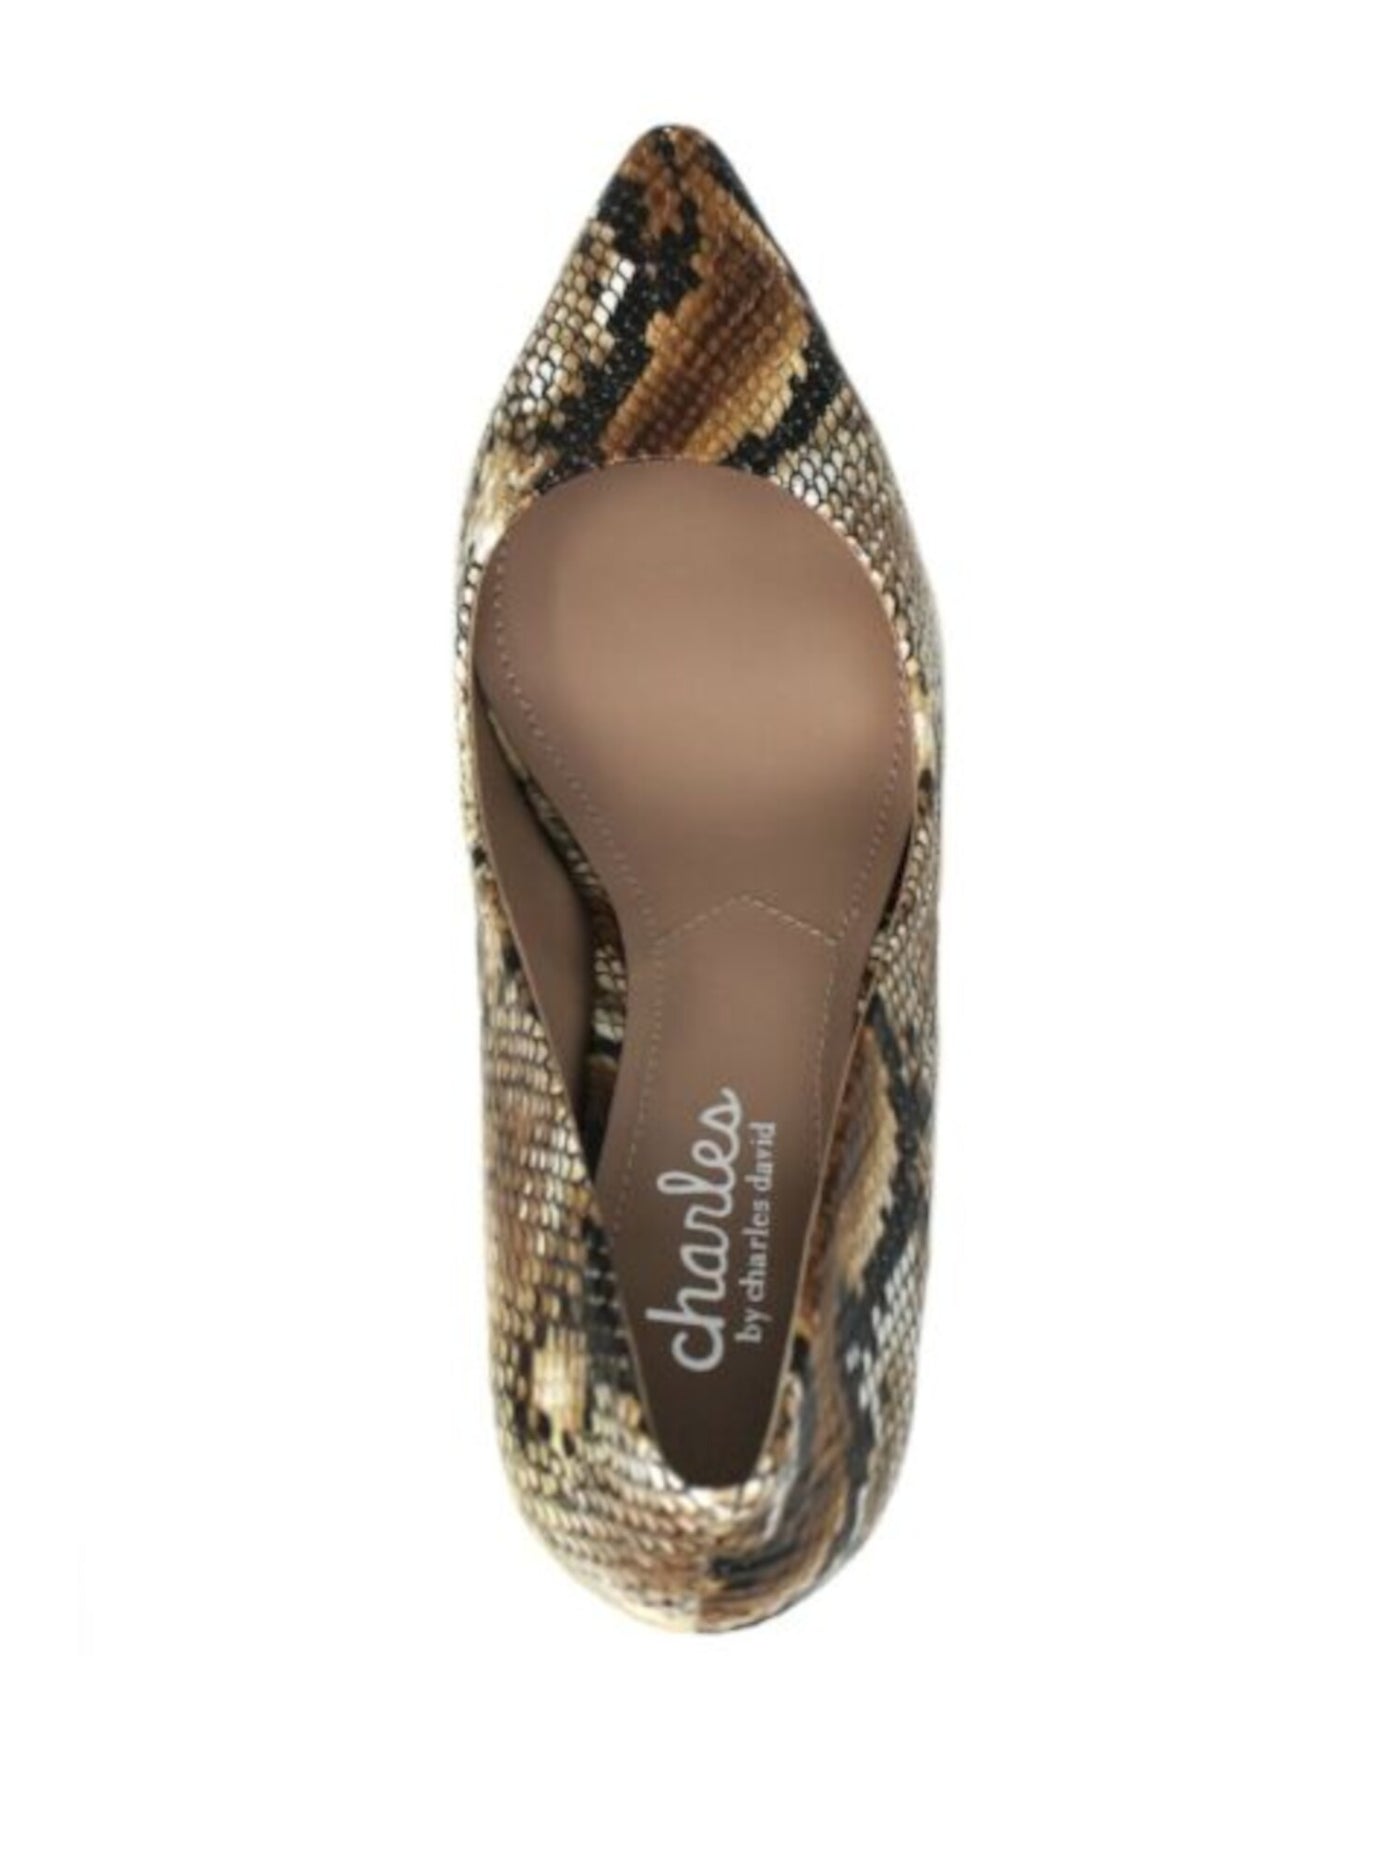 CHARLES BY CHARLES DAVID Womens Beige Snake Skin Padded Vasto Almond Toe Flare Slip On Heels Shoes 6.5 M